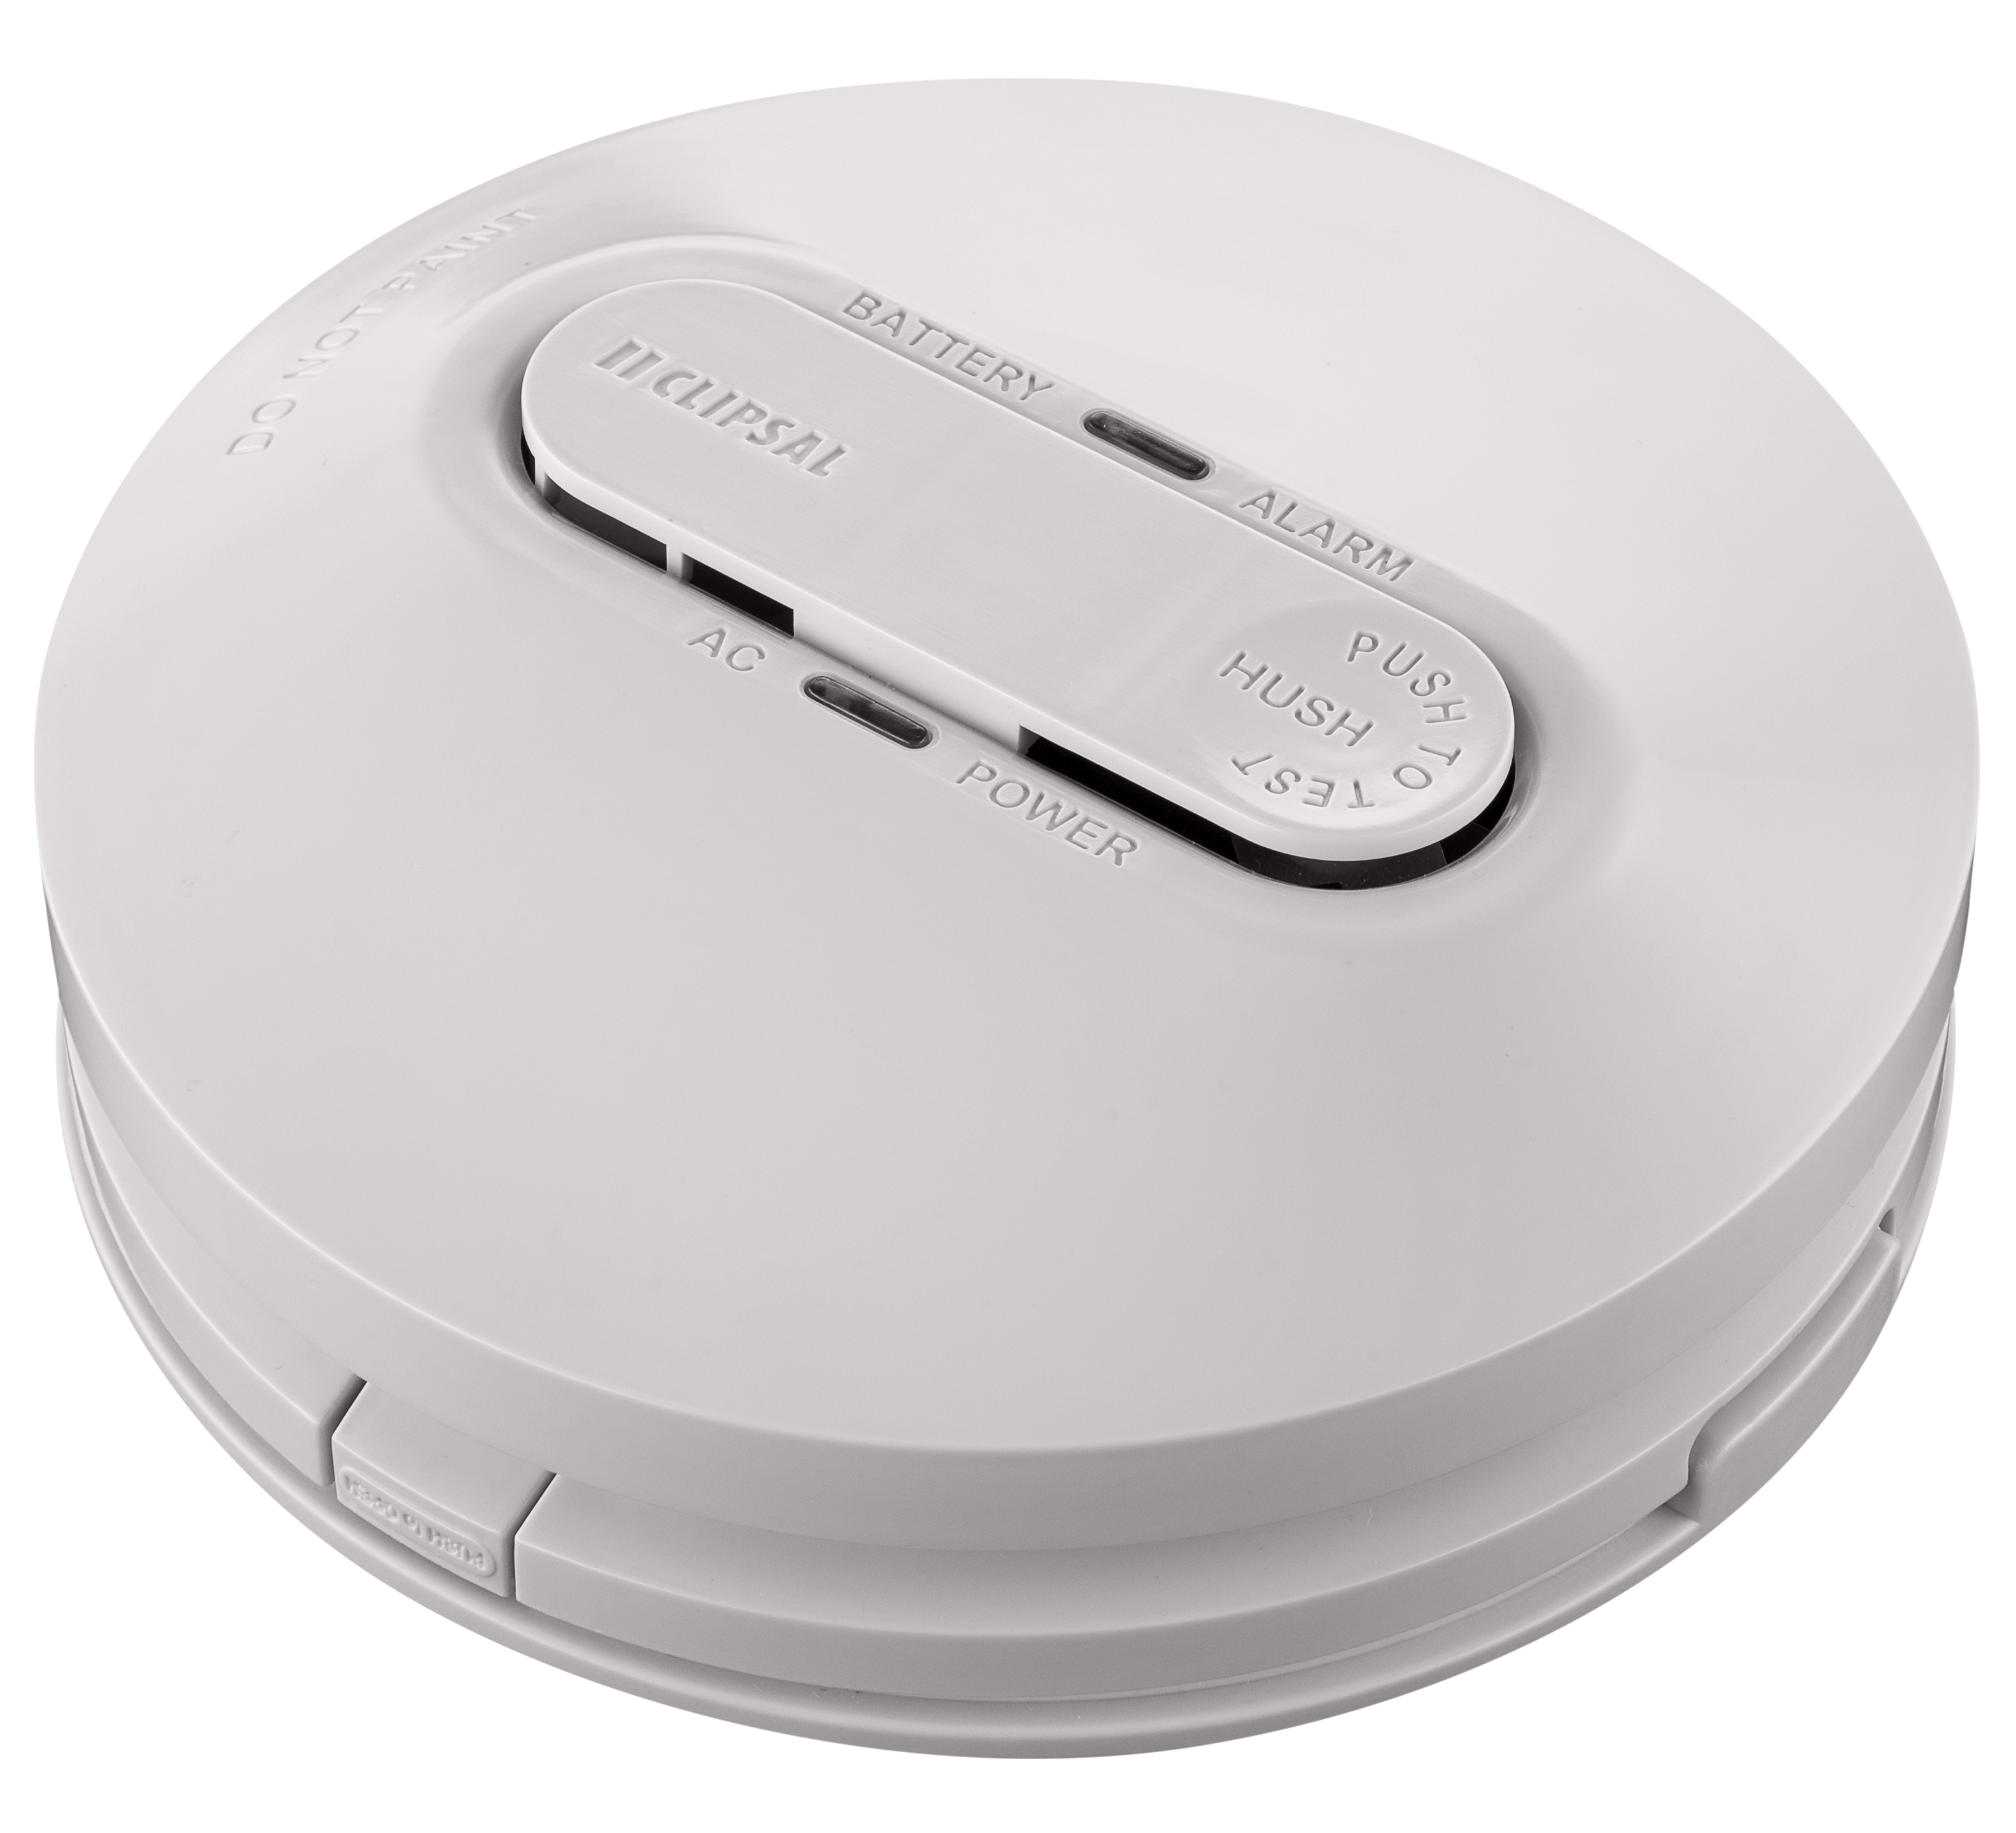 Photoelectric Smoke Alarm FireTek - Surface mount - 240 V mains-powered - Rechargeable 10-year lithium battery backup